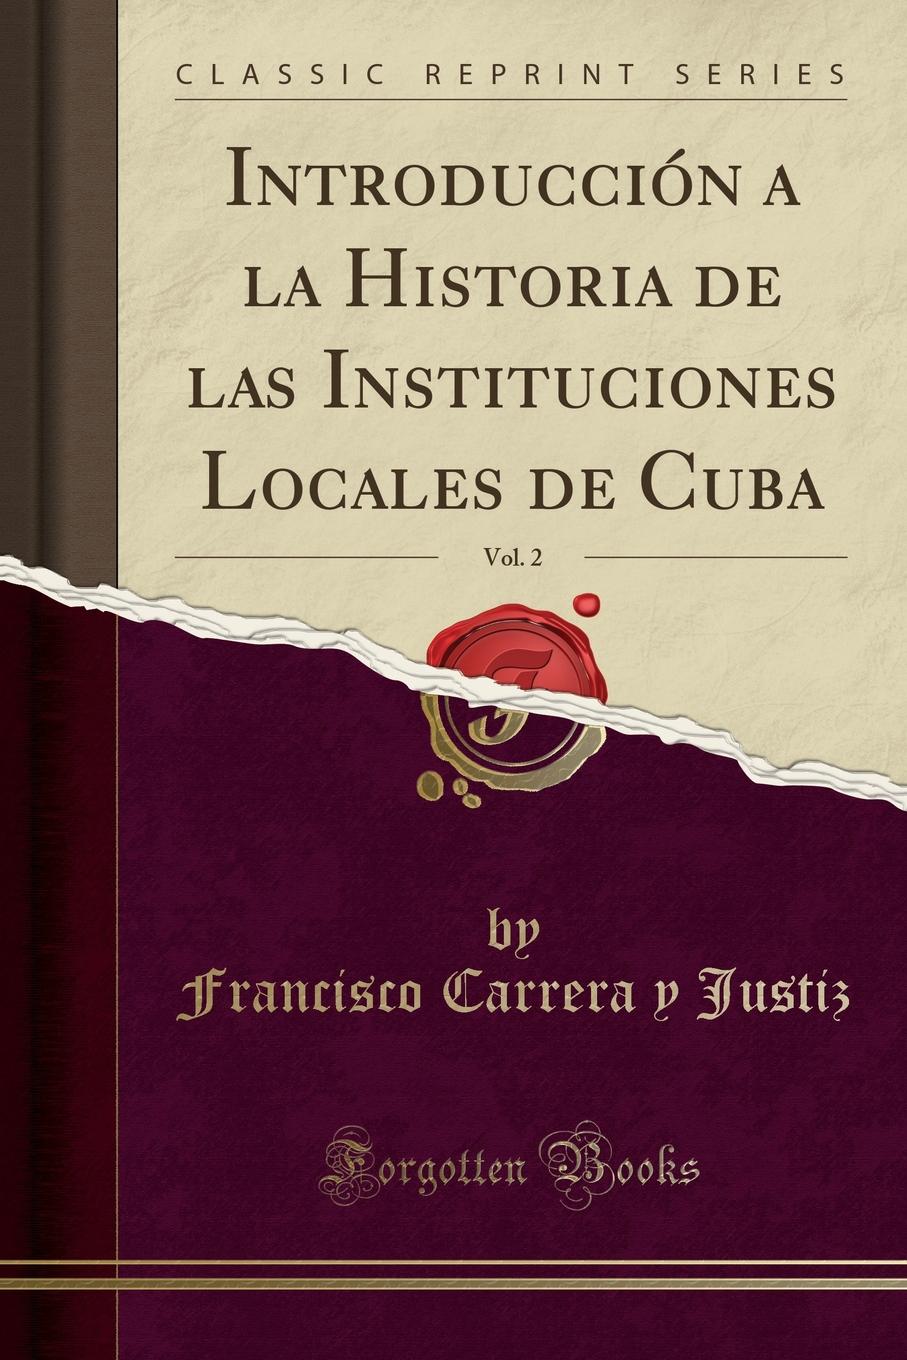 Francisco Carrera y Justiz Introduccion a la Historia de las Instituciones Locales de Cuba, Vol. 2 (Classic Reprint)